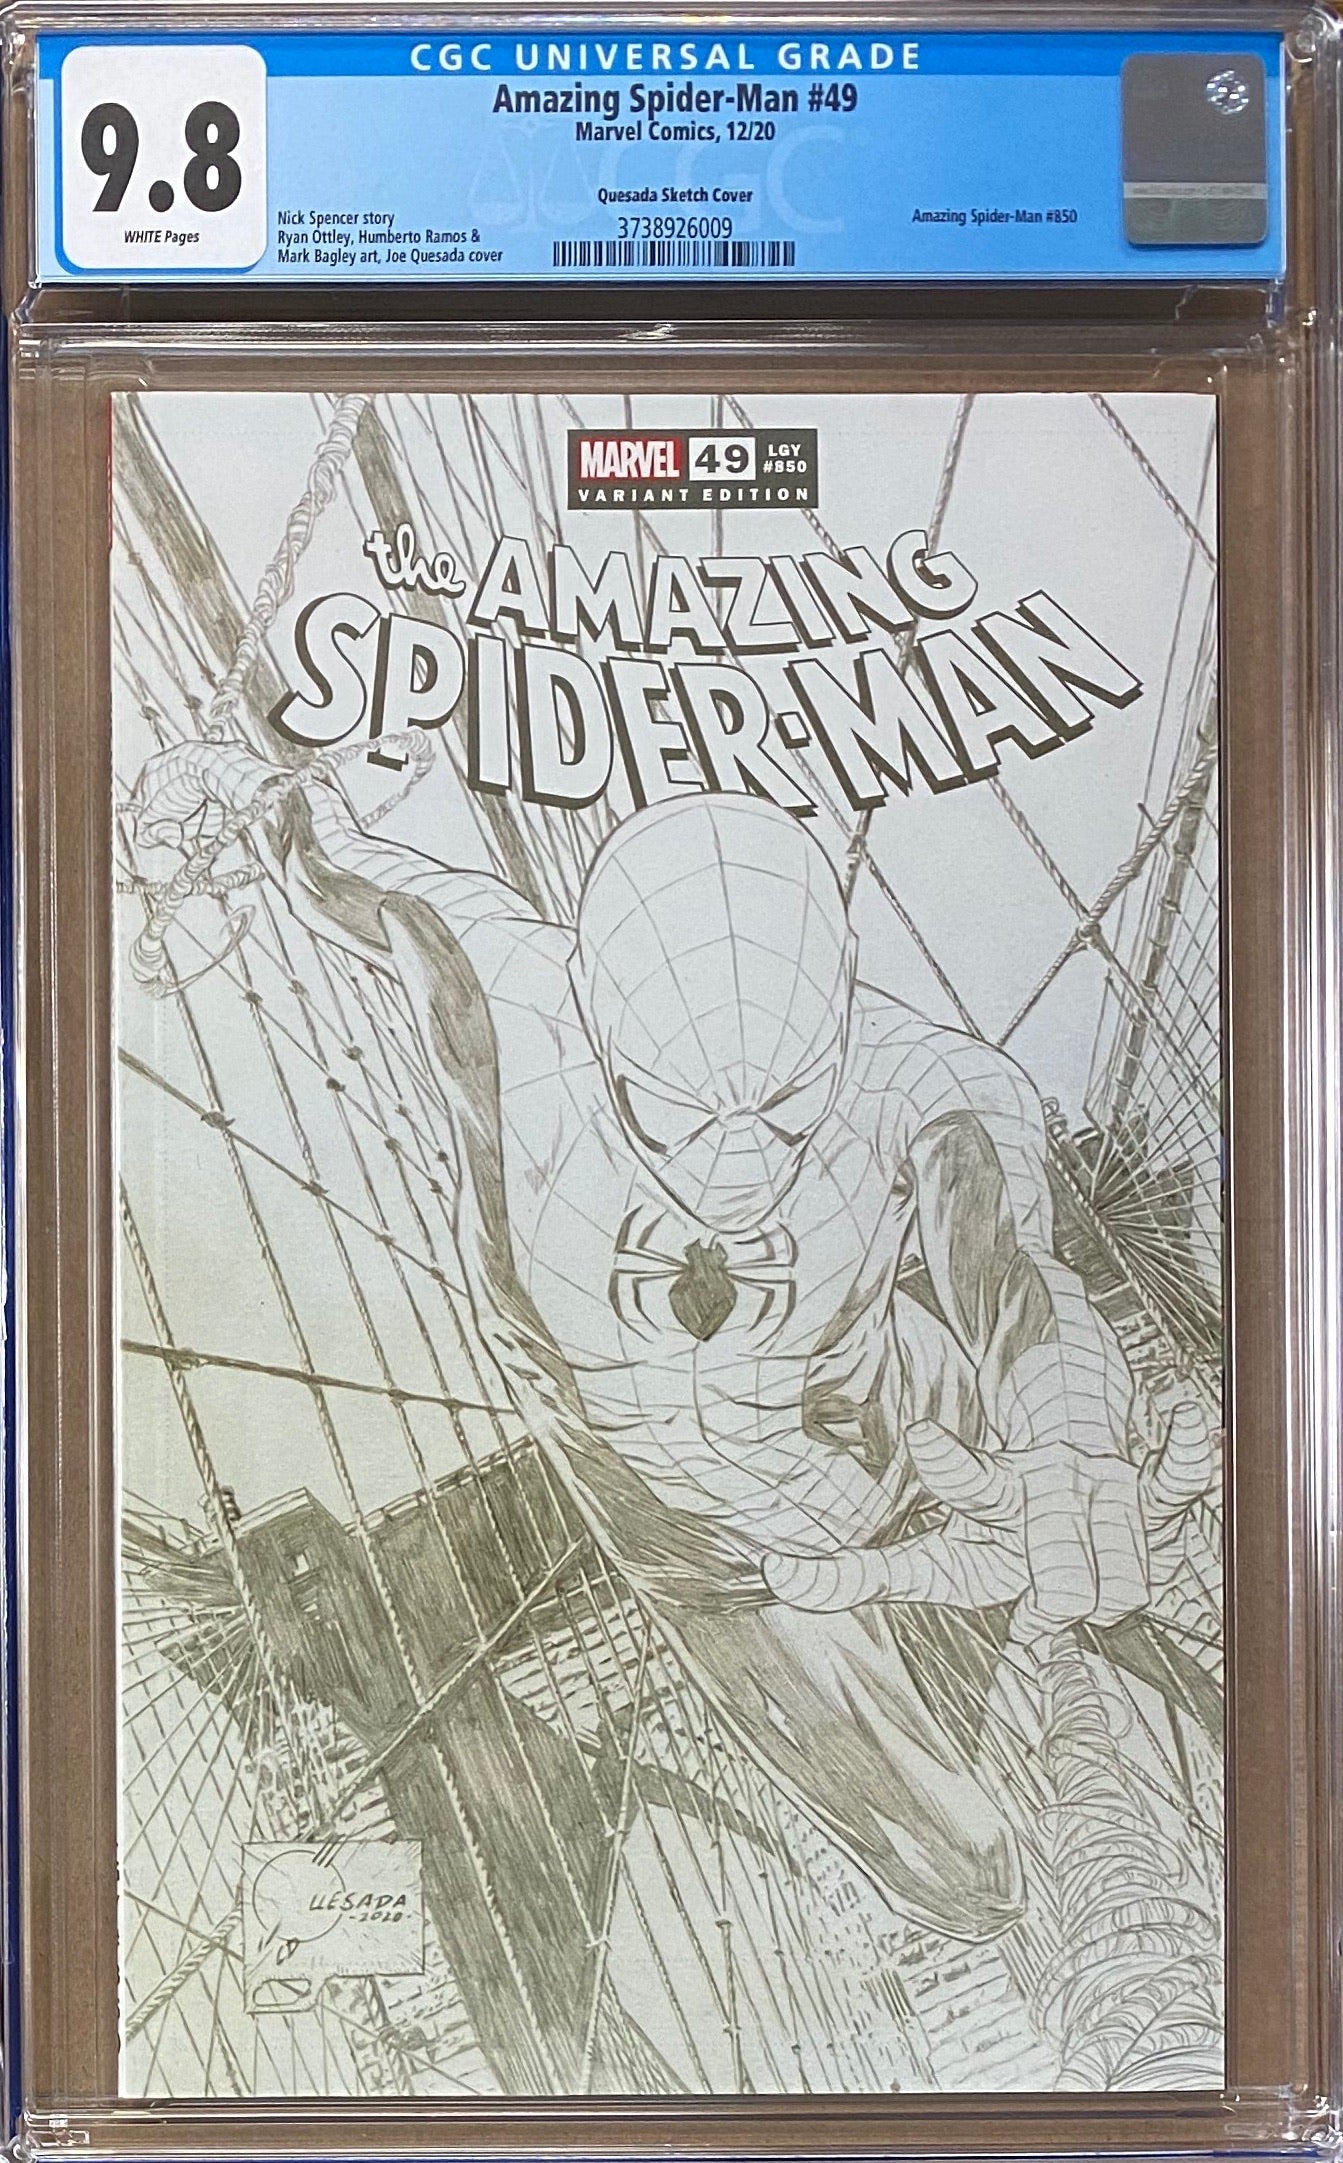 Amazing Spider-Man #850 (#49) Quesada Sketch Retailer Incentive Variant CGC 9.8